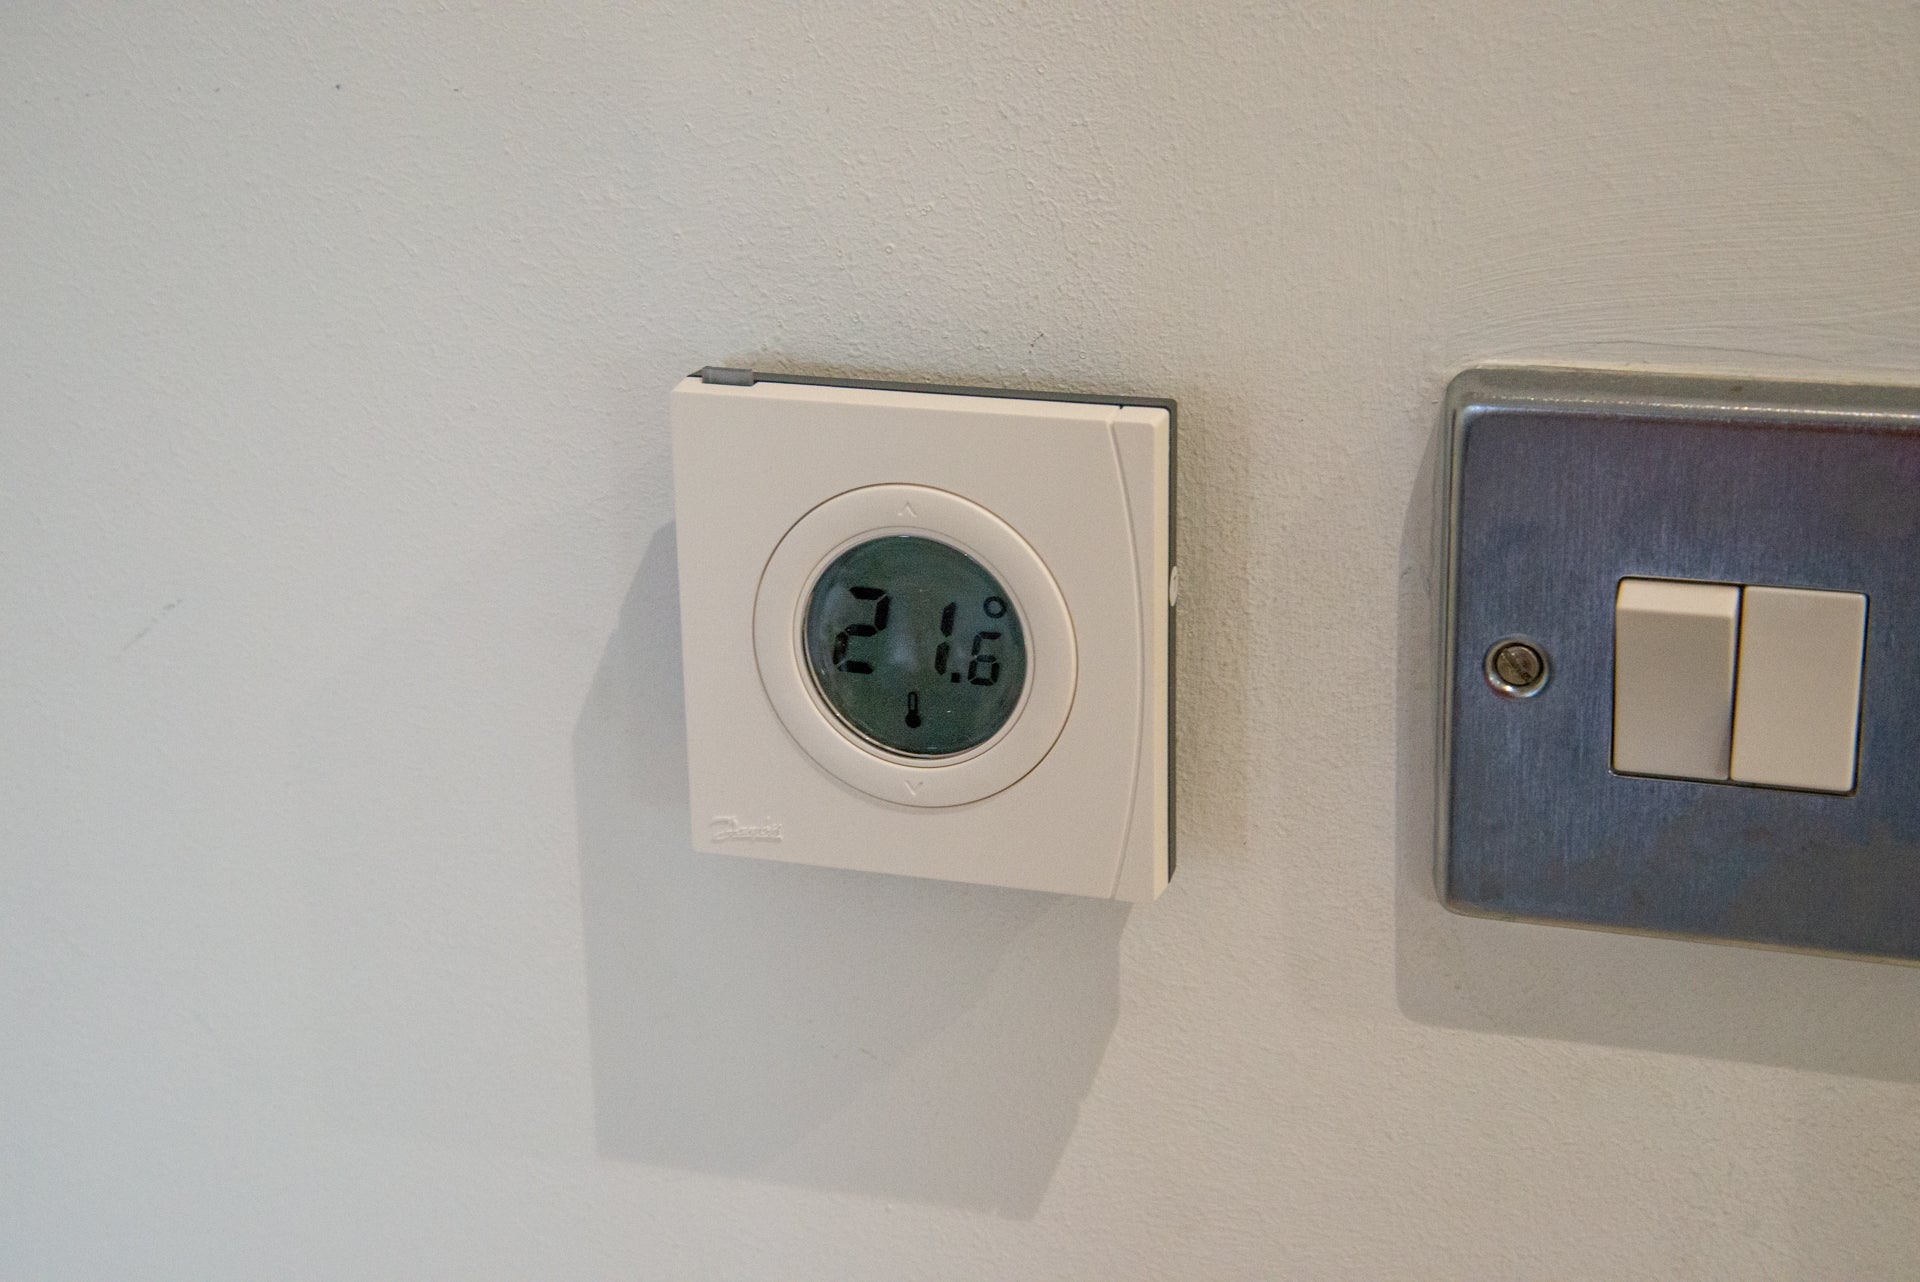 Genius Hub Thermostat